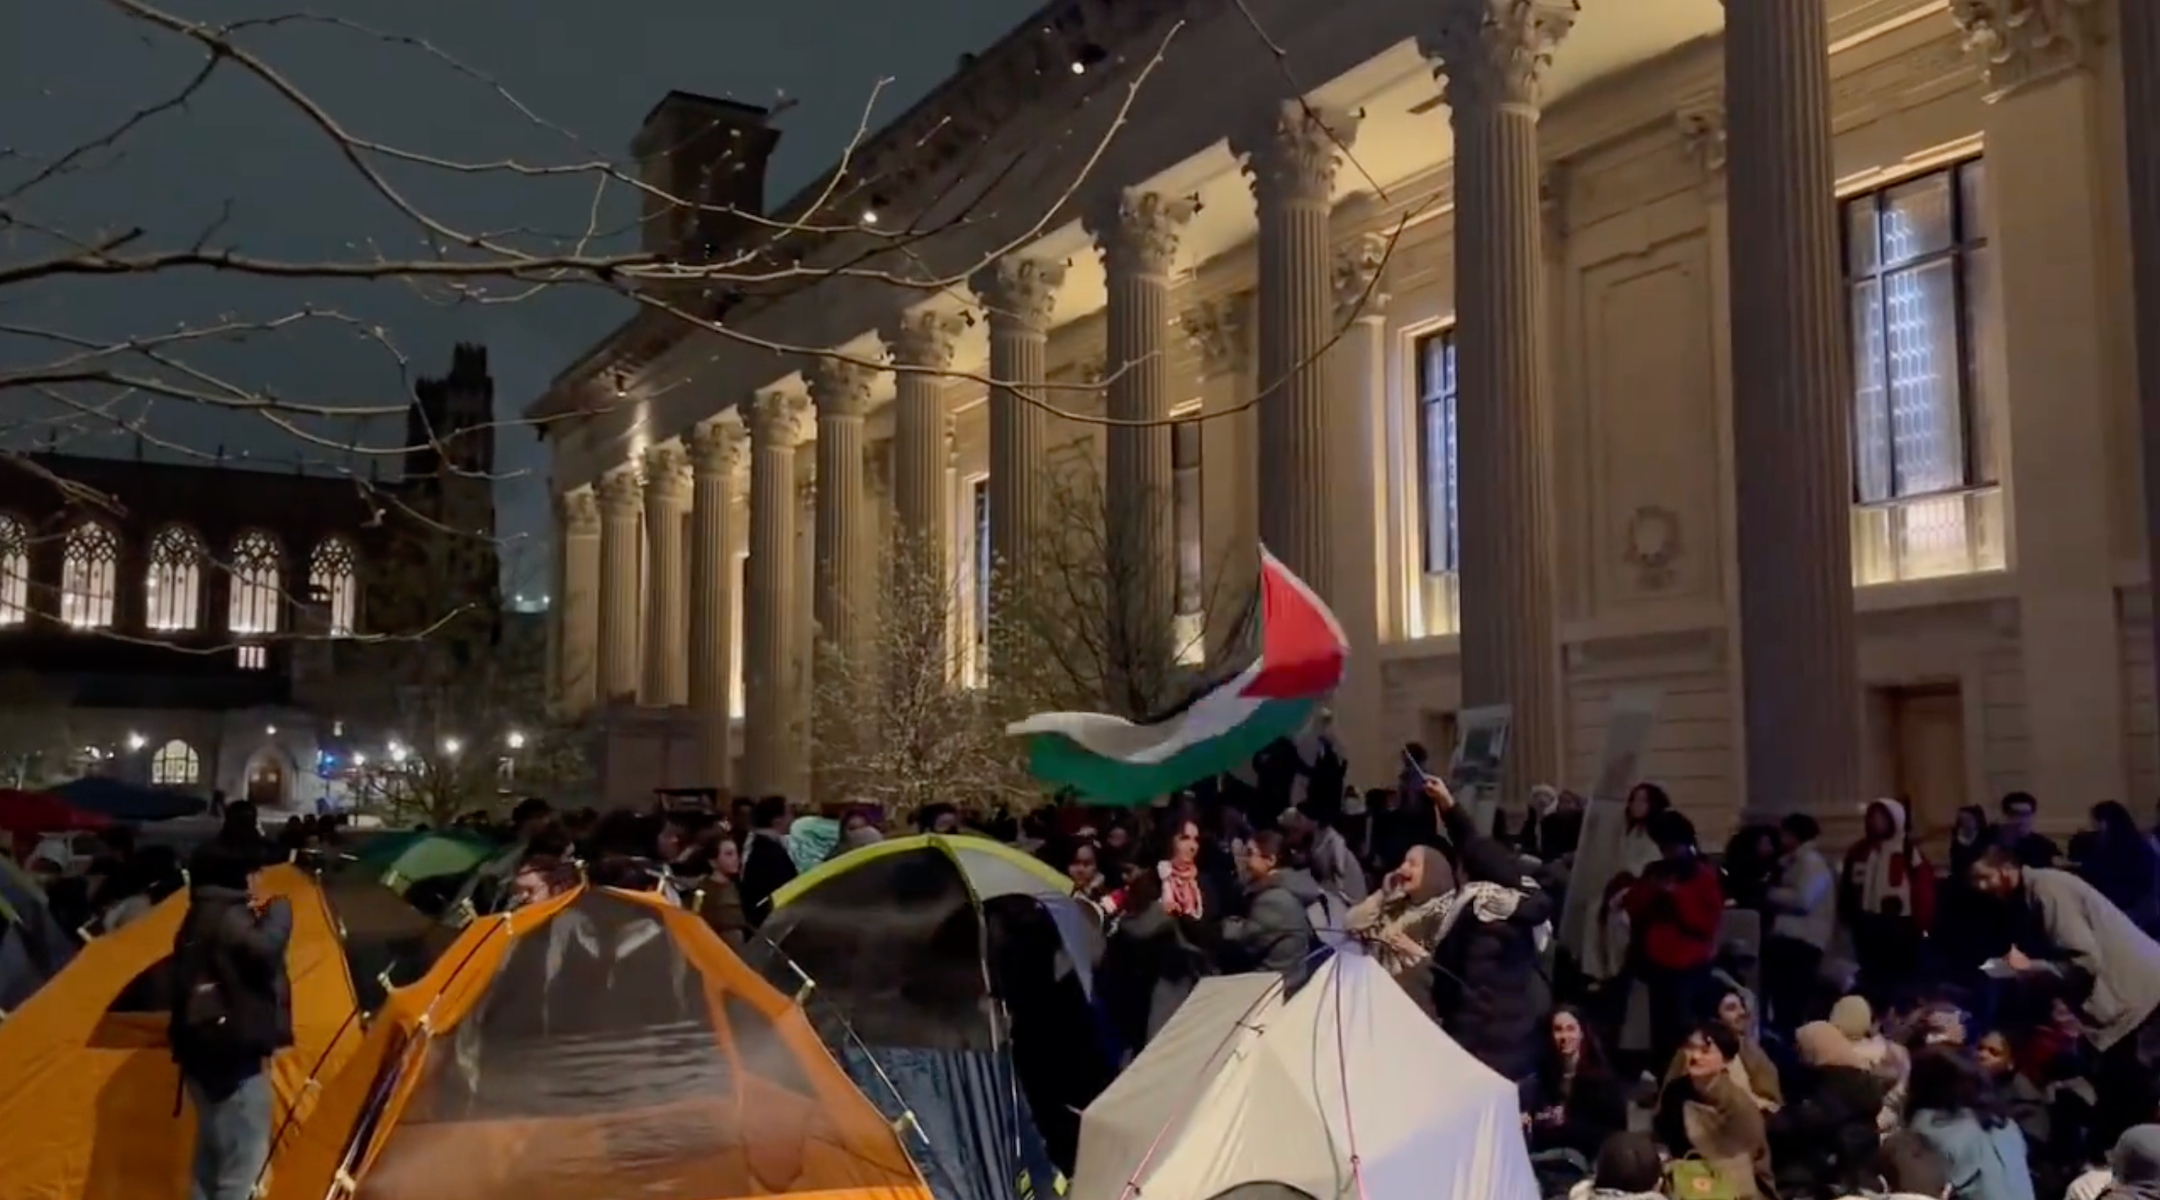 The Yale University pro-Palestinian encampment on Friday night. (Screenshot)